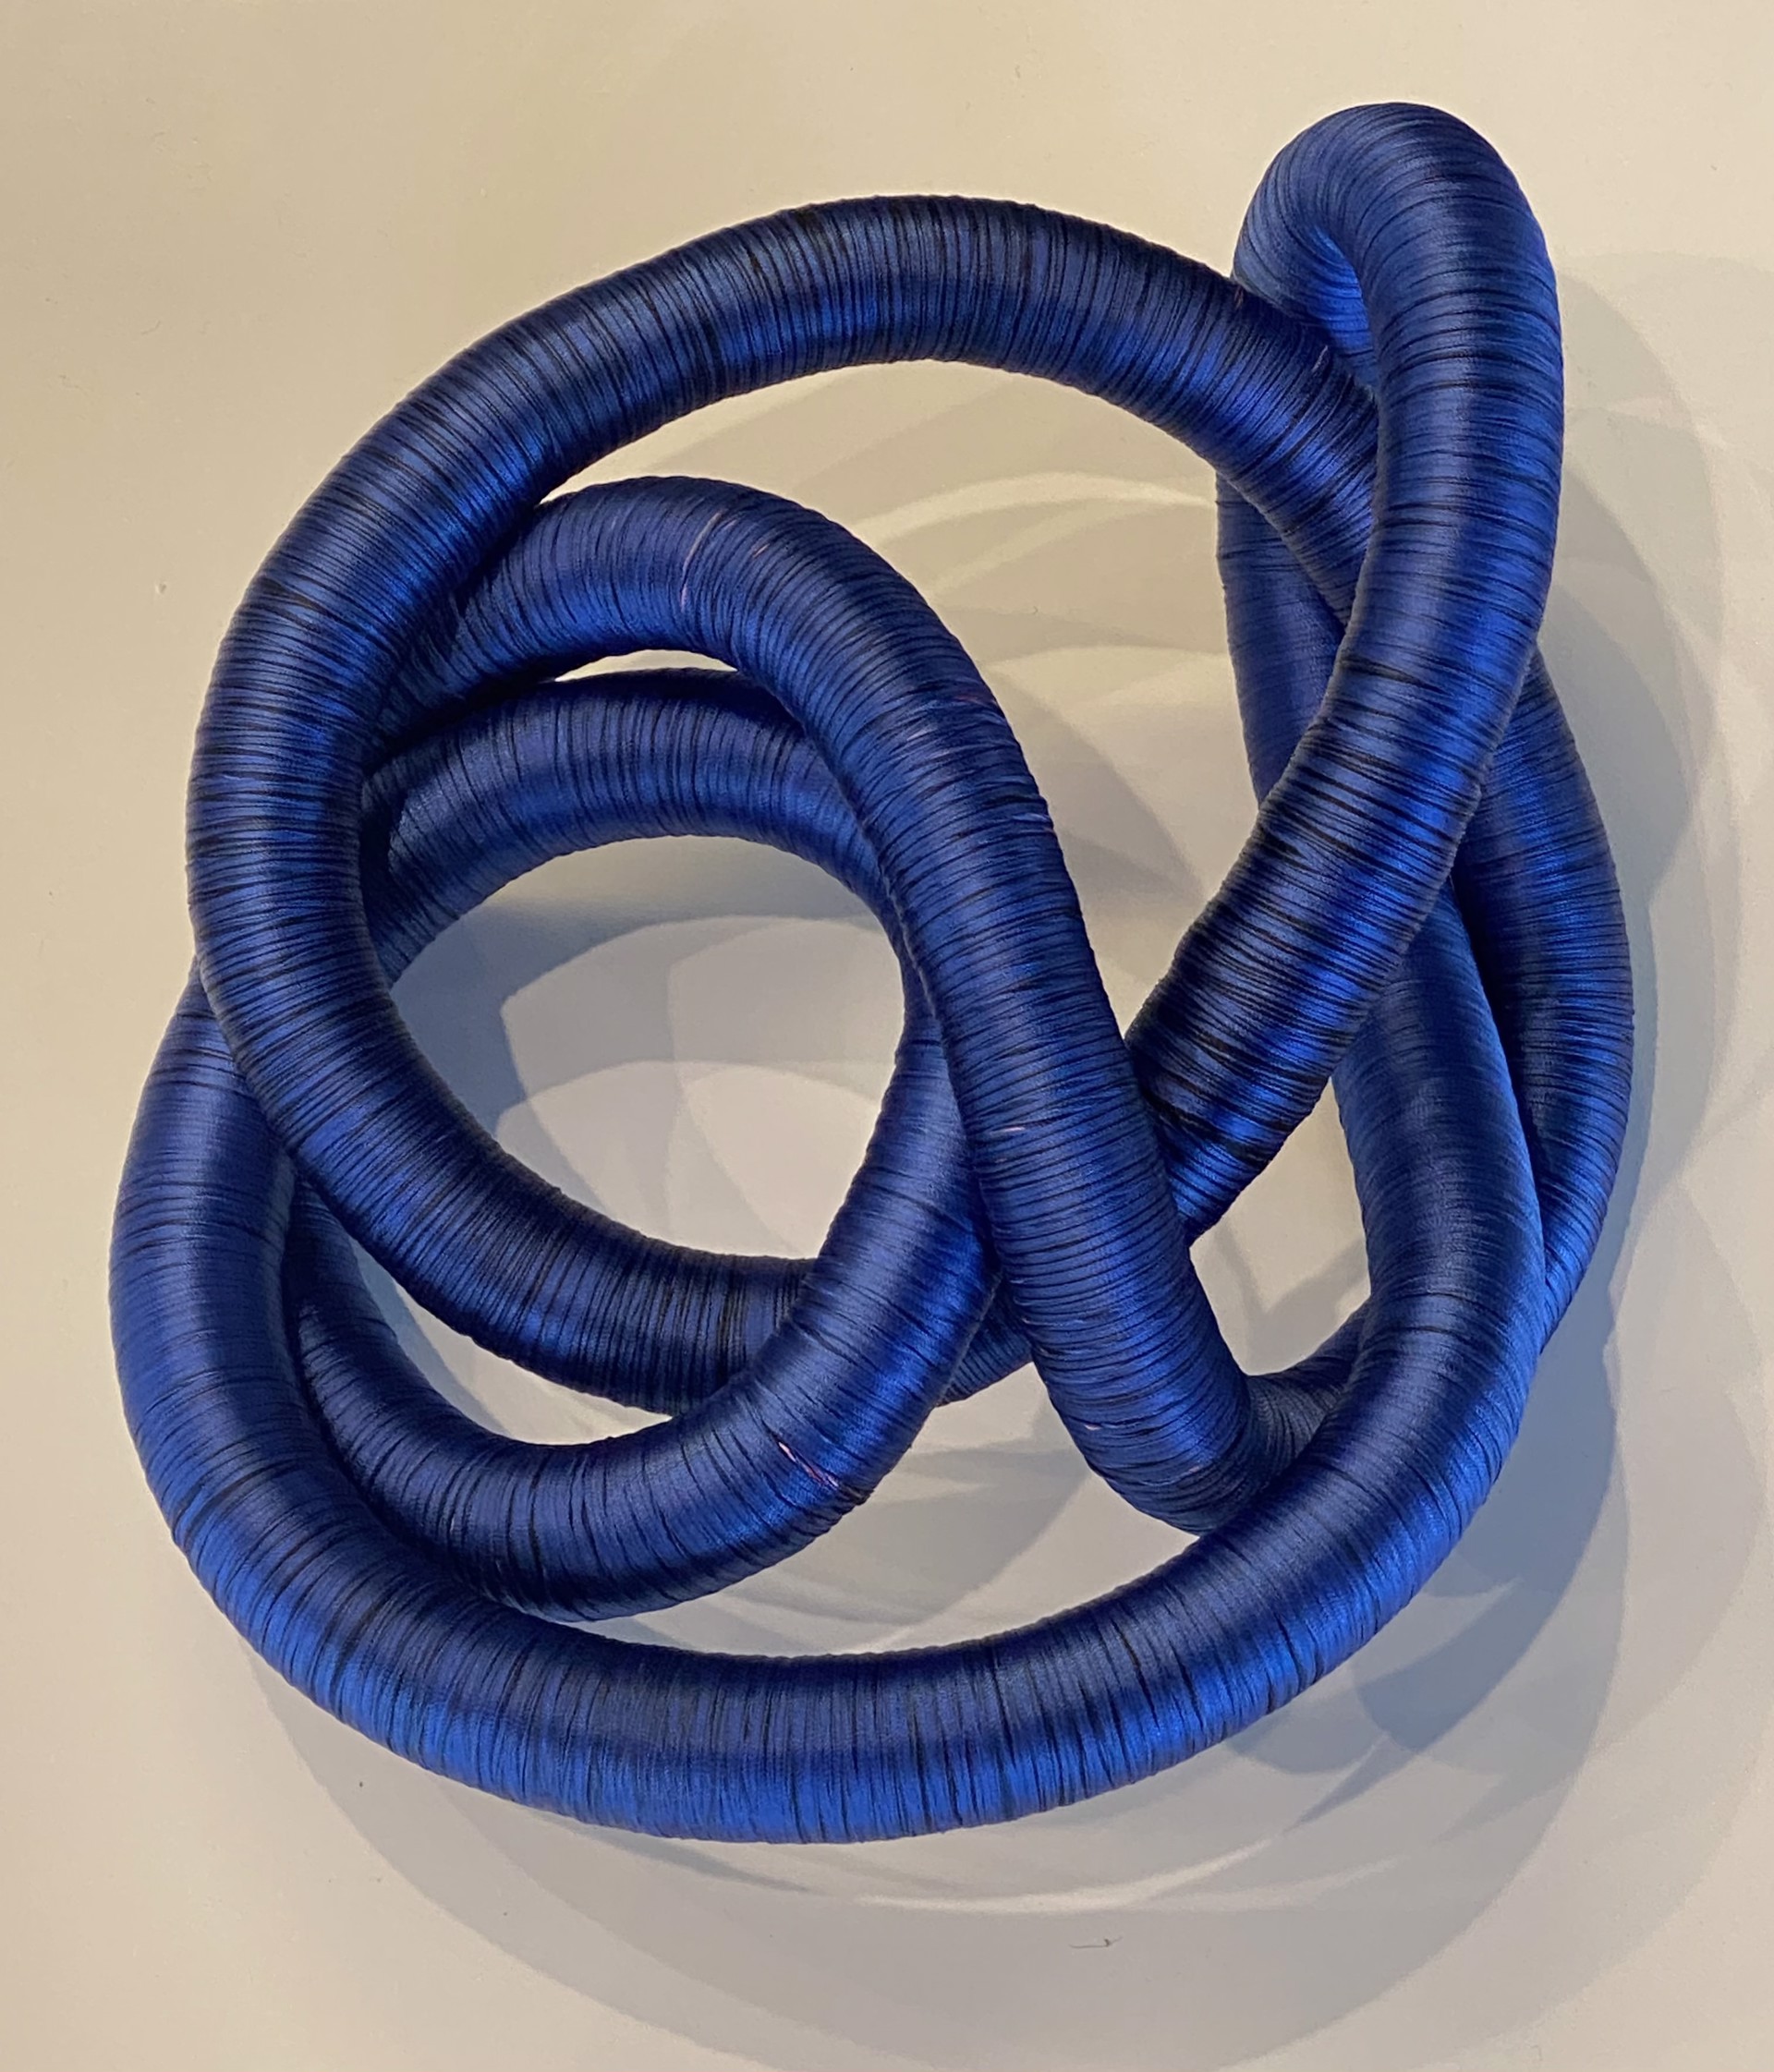 Blue Knot by Jesus Pedraglio Belmont